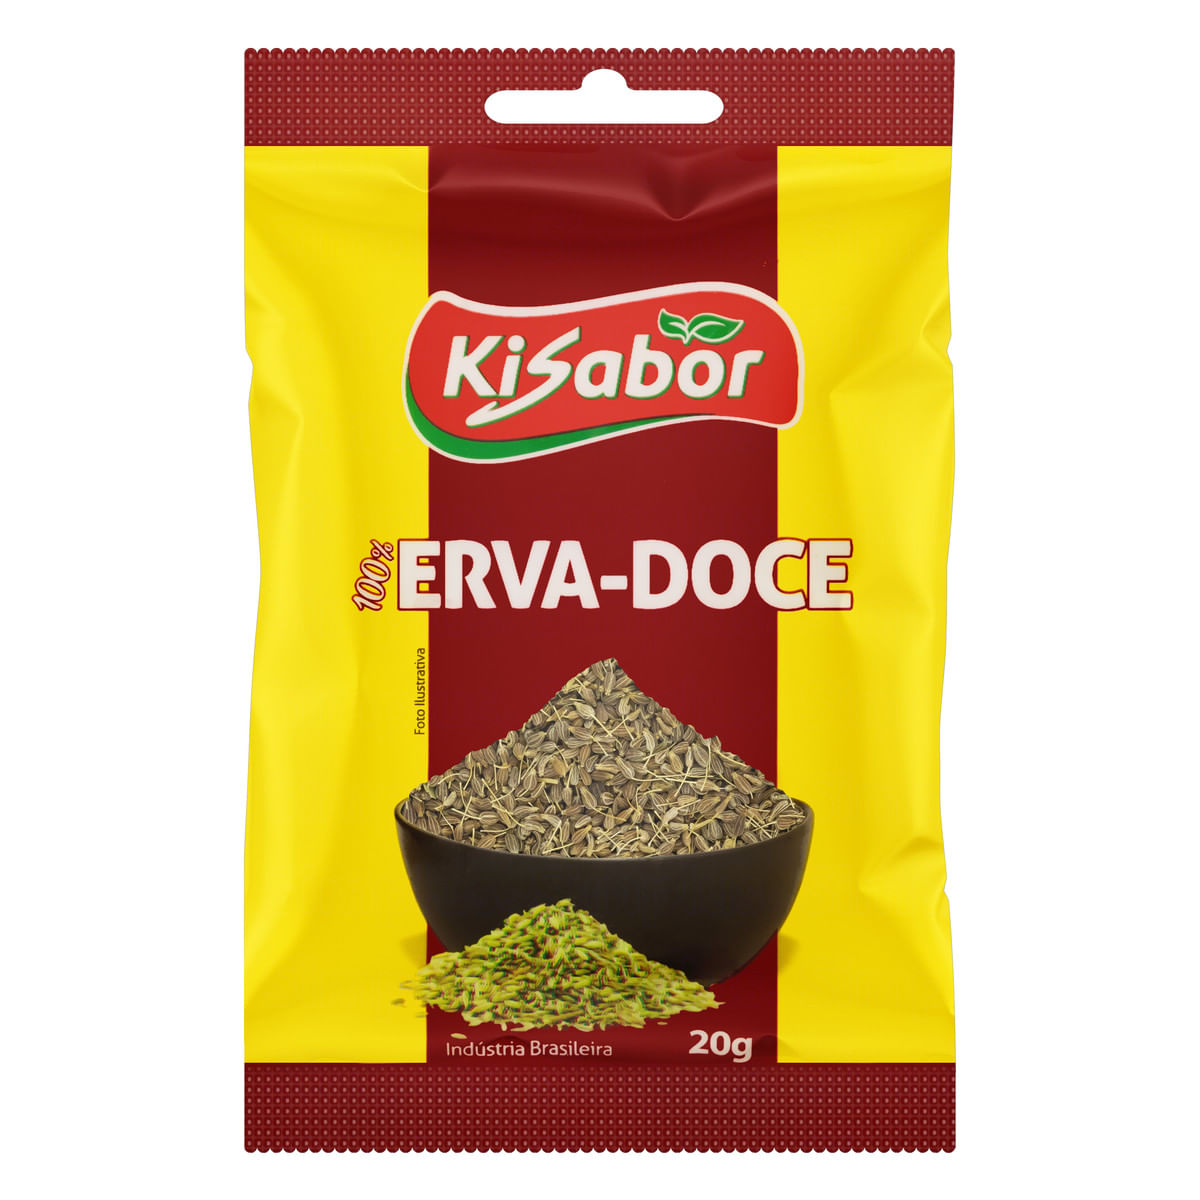 erva-doce-kisabor-pacote-20g-1.jpg